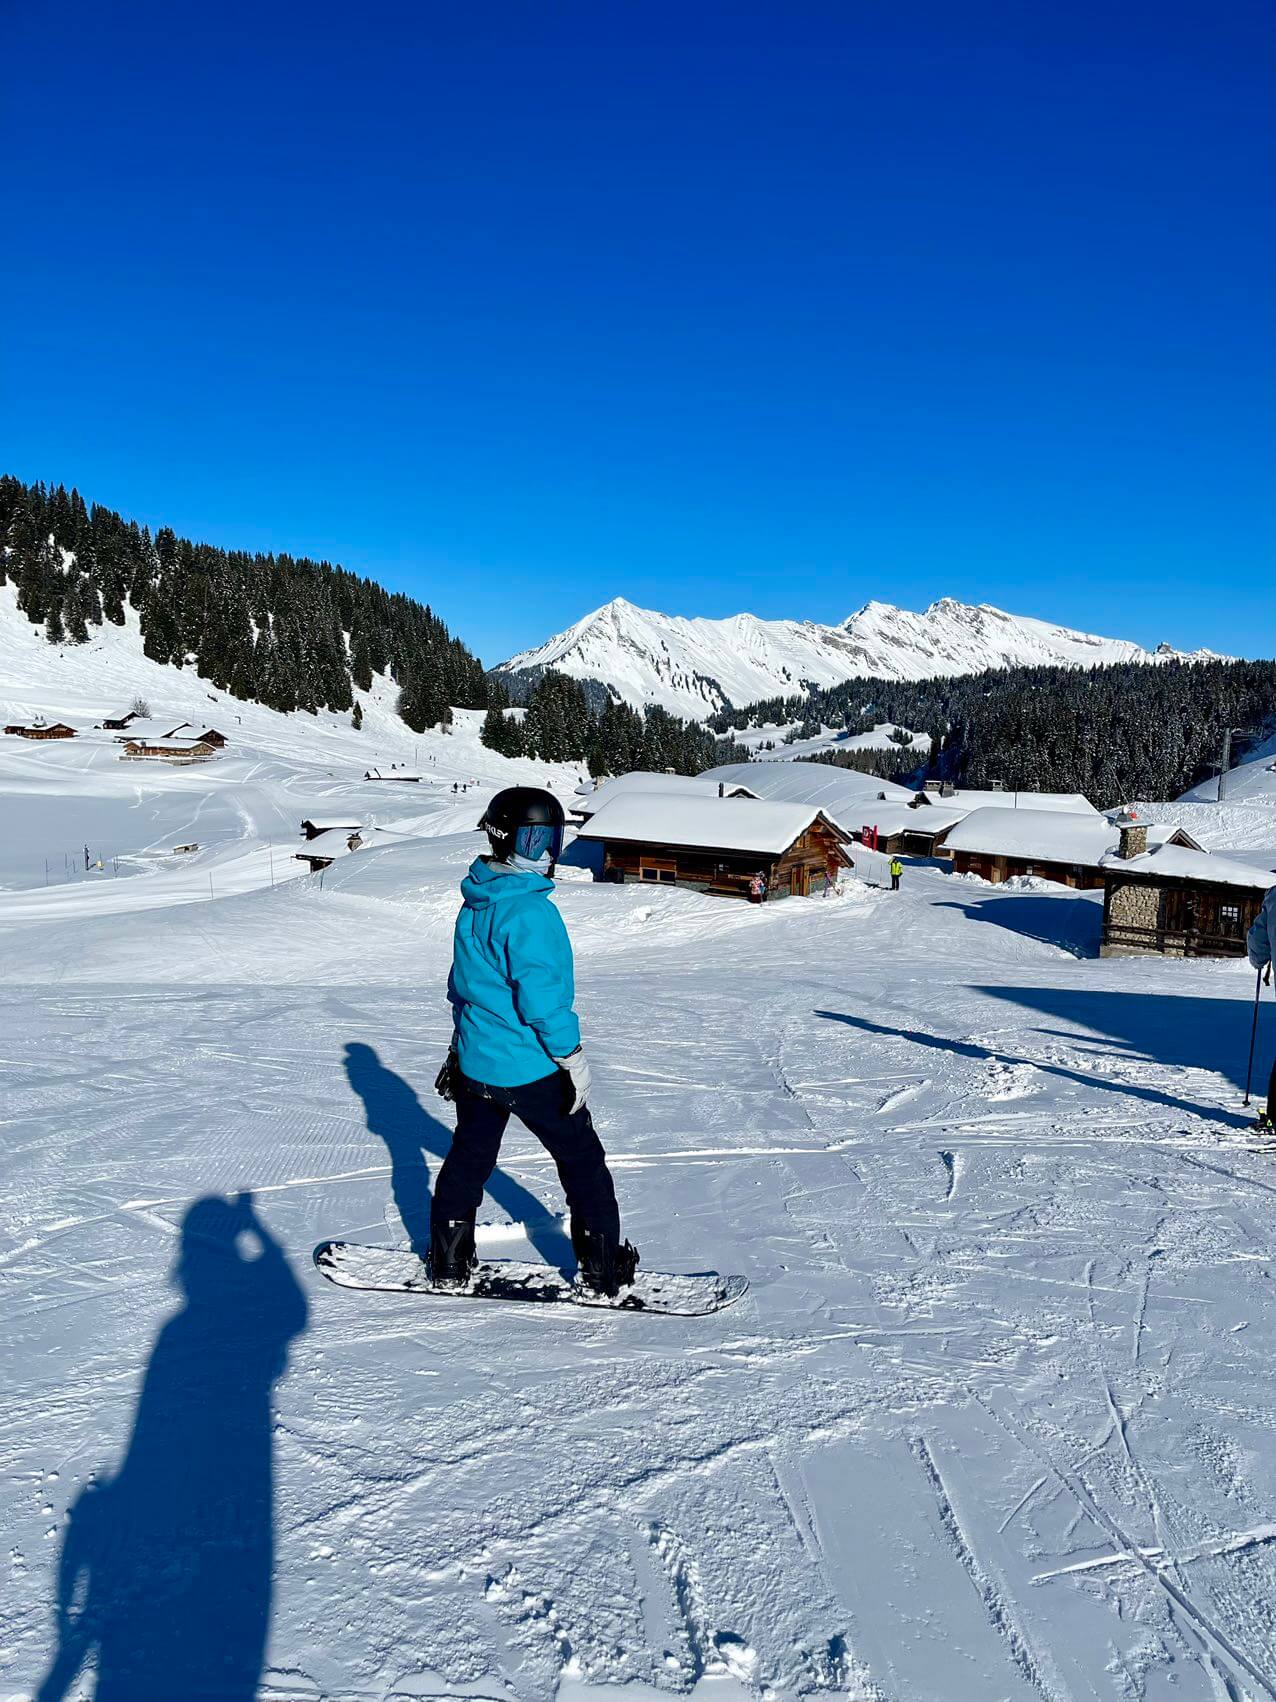 Winter Skiing Expedition to Switzerland - Winter Skiing Expedition to Switzerland